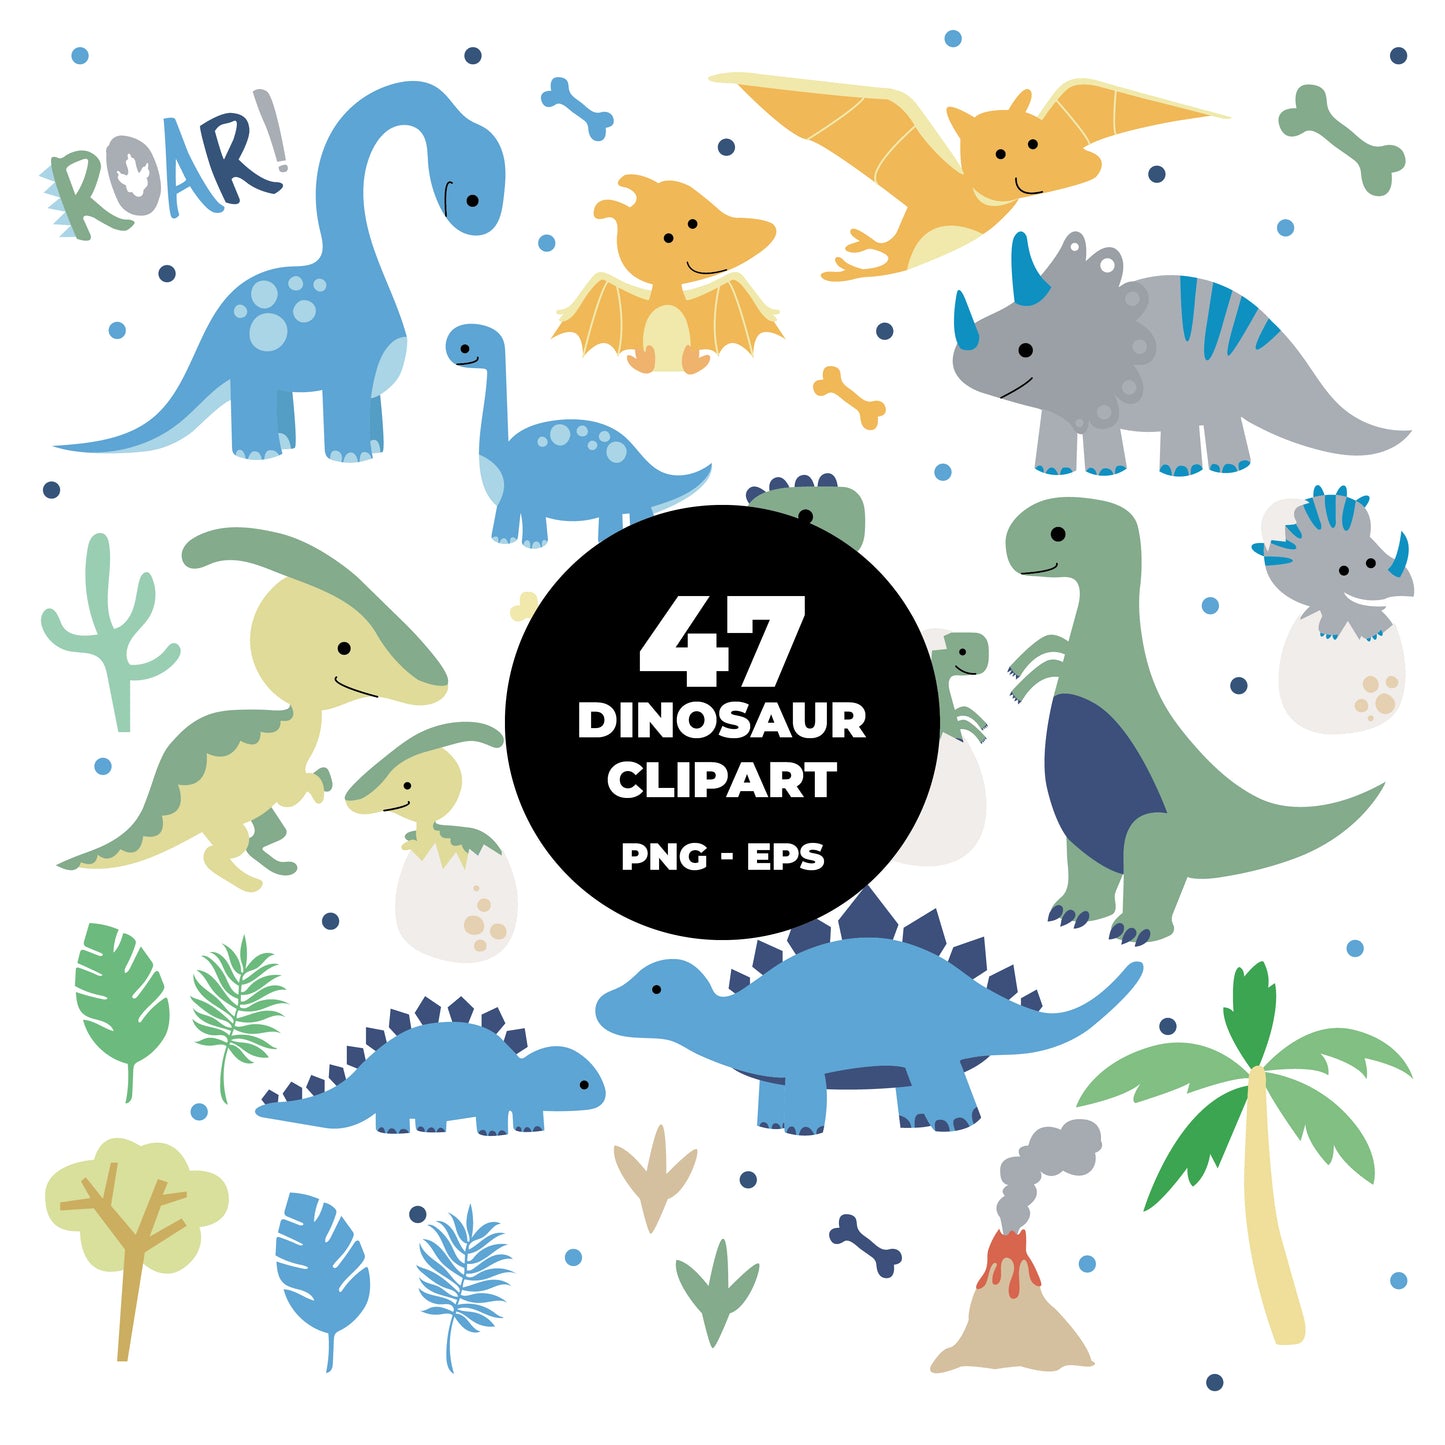 COD796 - Dinosaur clipart, kids dinosaur clipart, t-rex clipart, dino clipart, triceratops clipart files